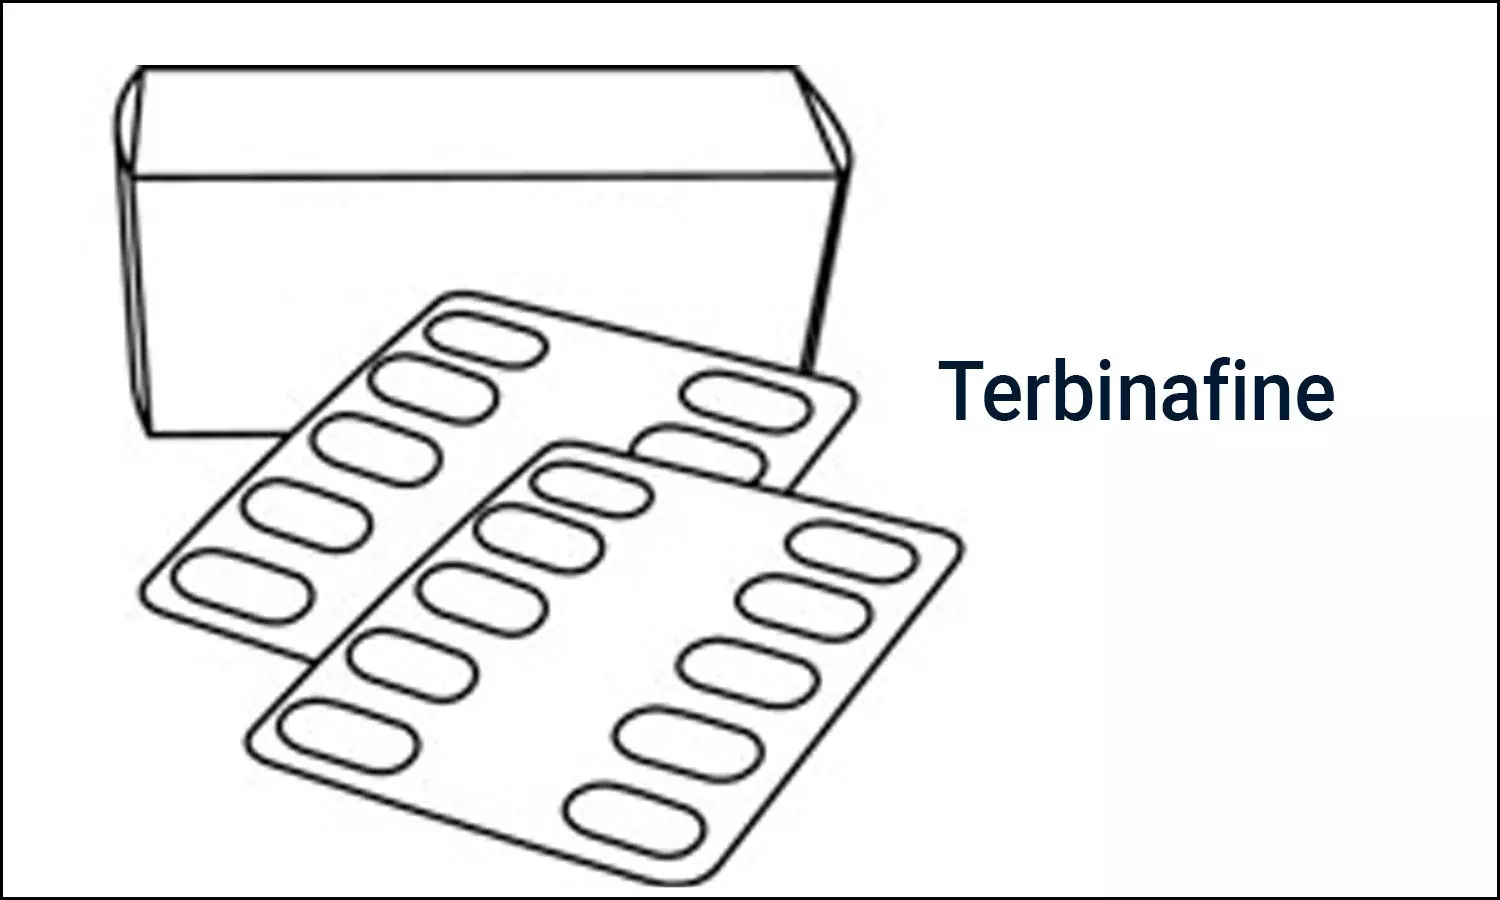 Terbinafine use safe during pregnancy: JAMA